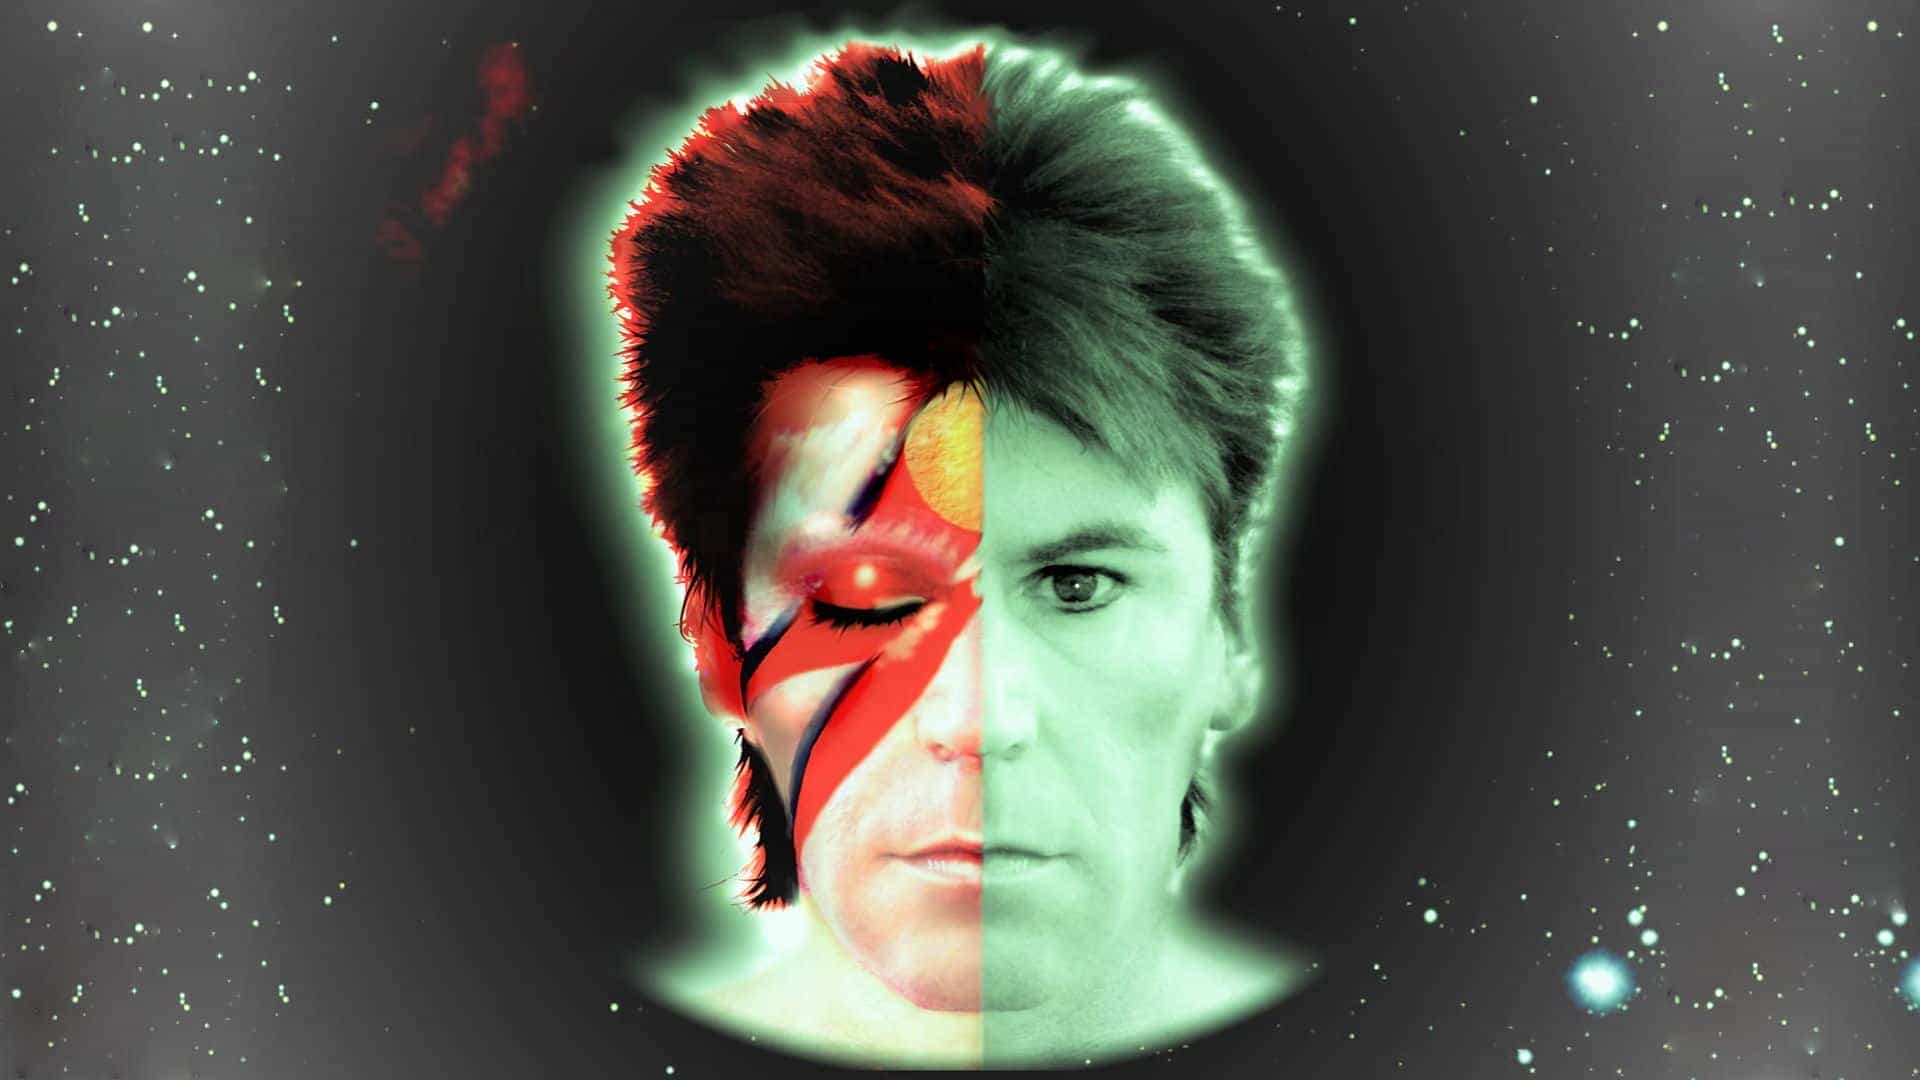 Aladdinsane - The Sound & Vision of Bowie